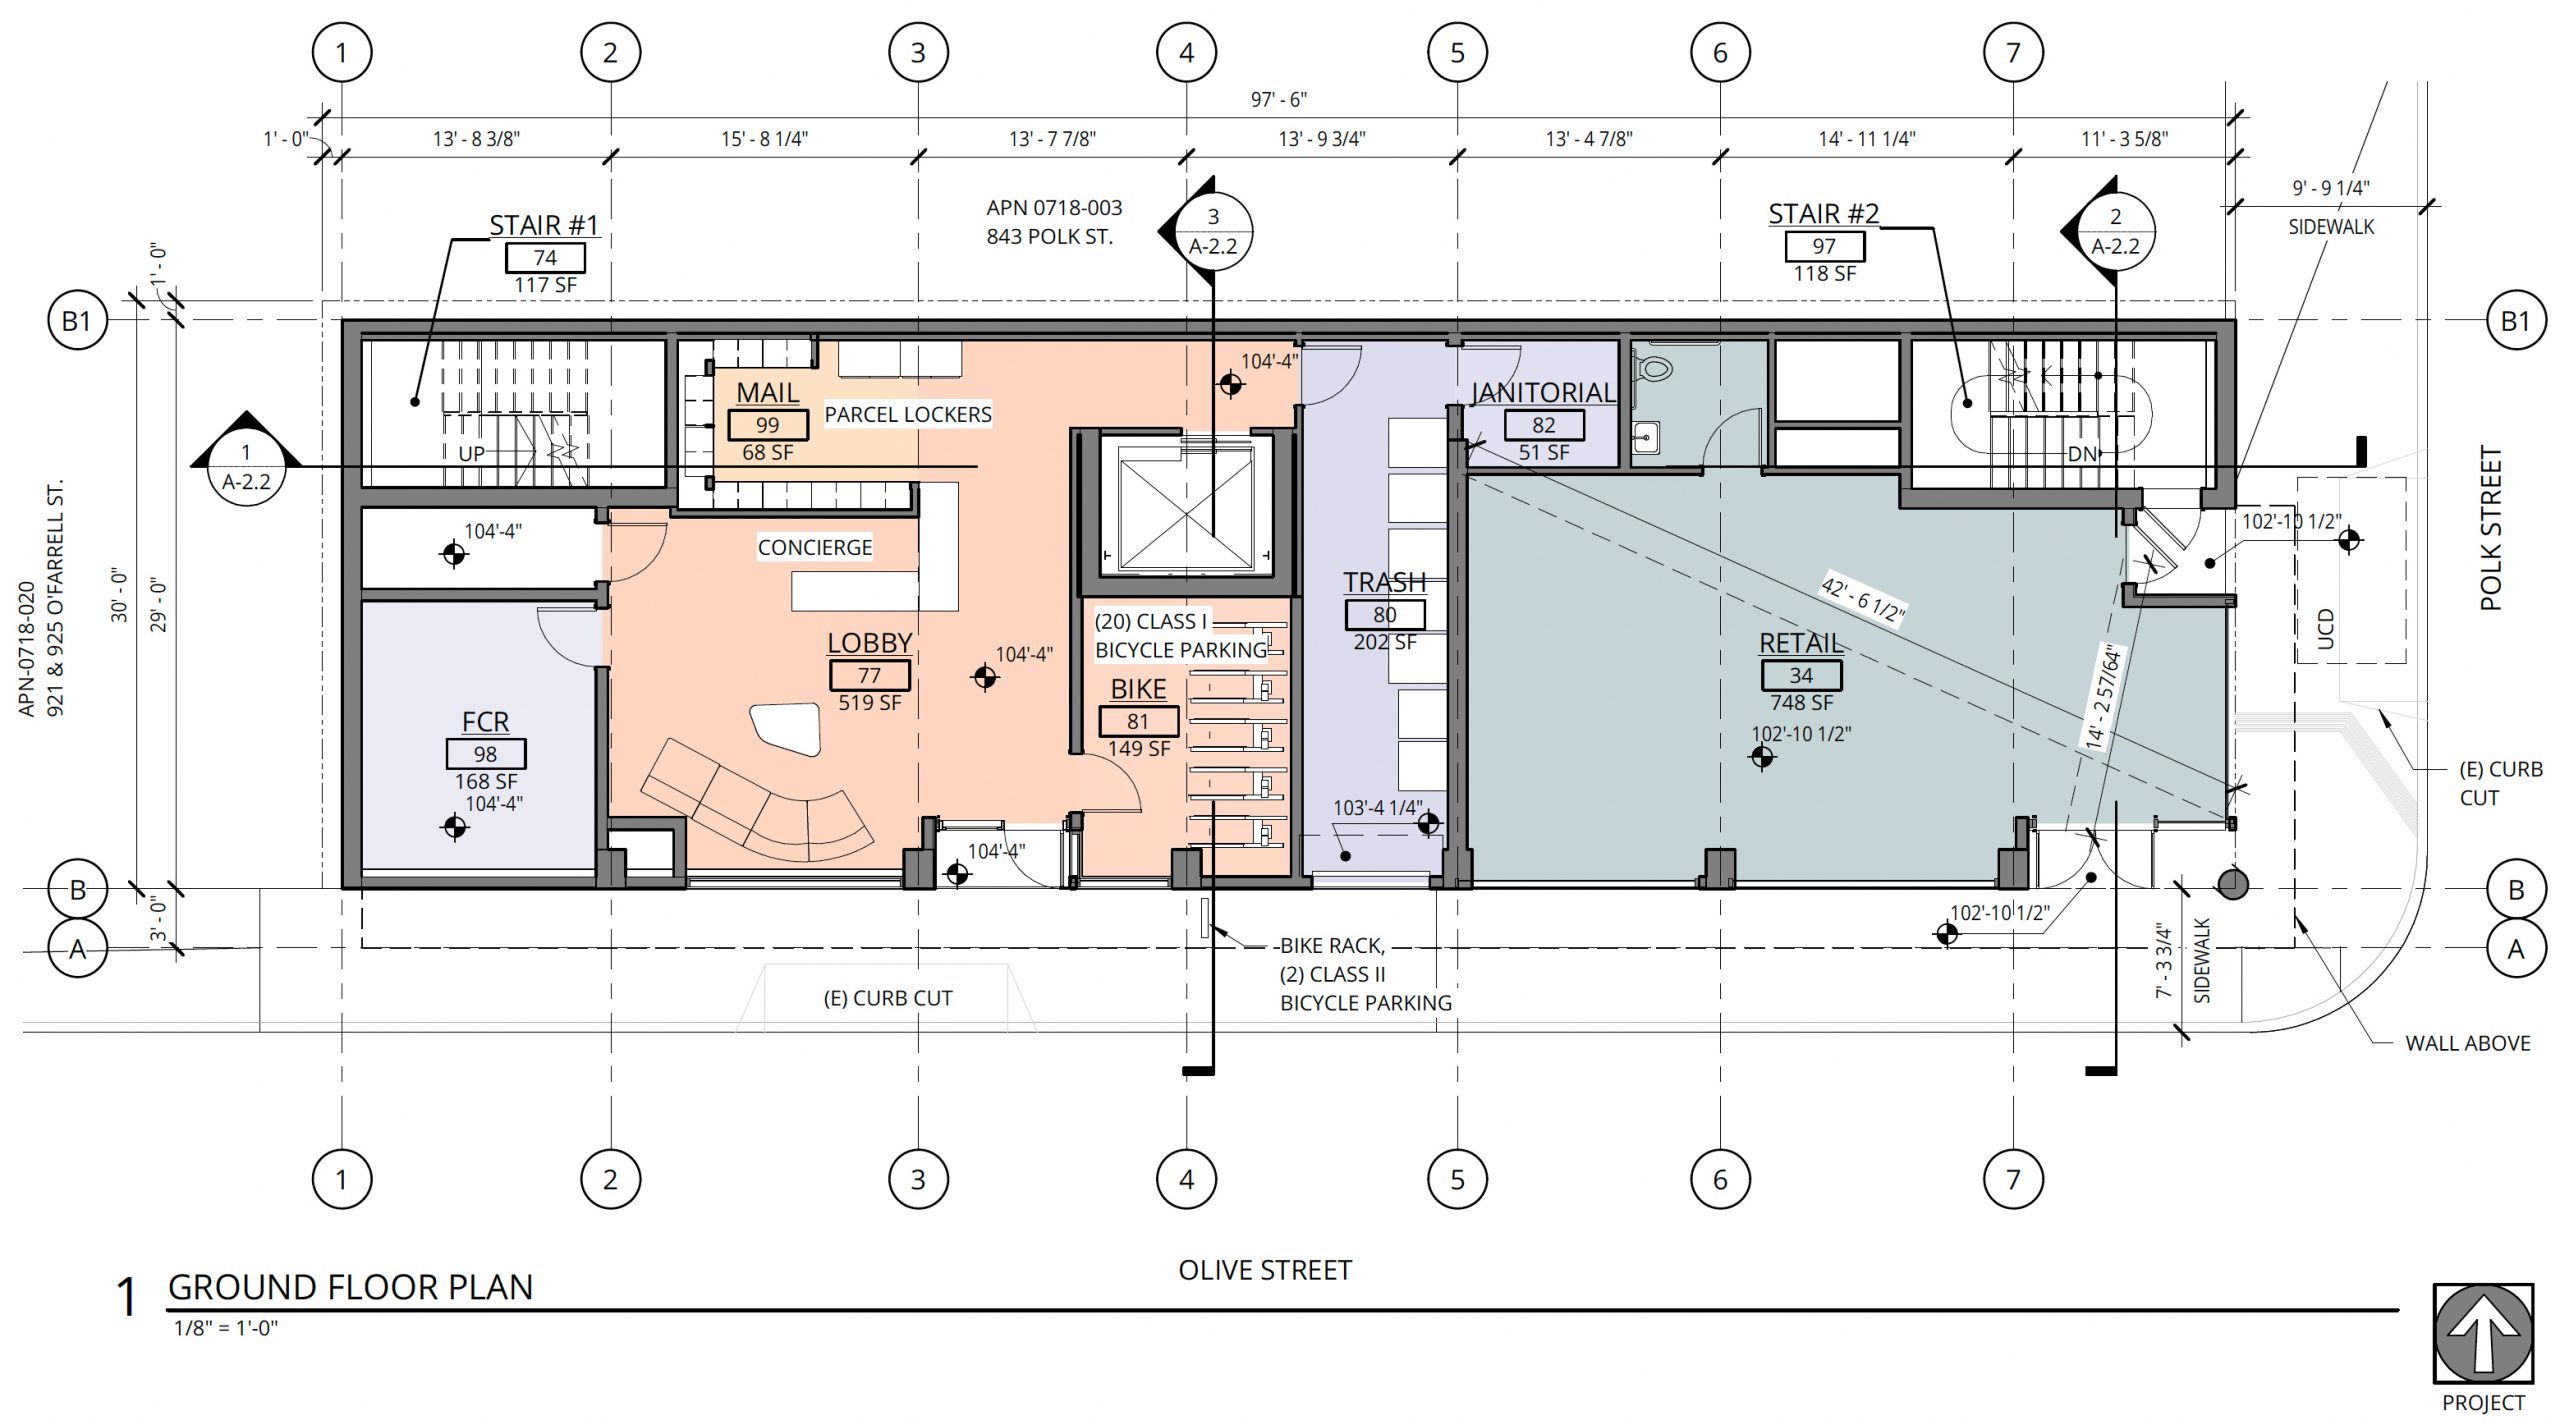 841 Polk Street ground-level floor plan, rendering by Ankrom Moisan Architects